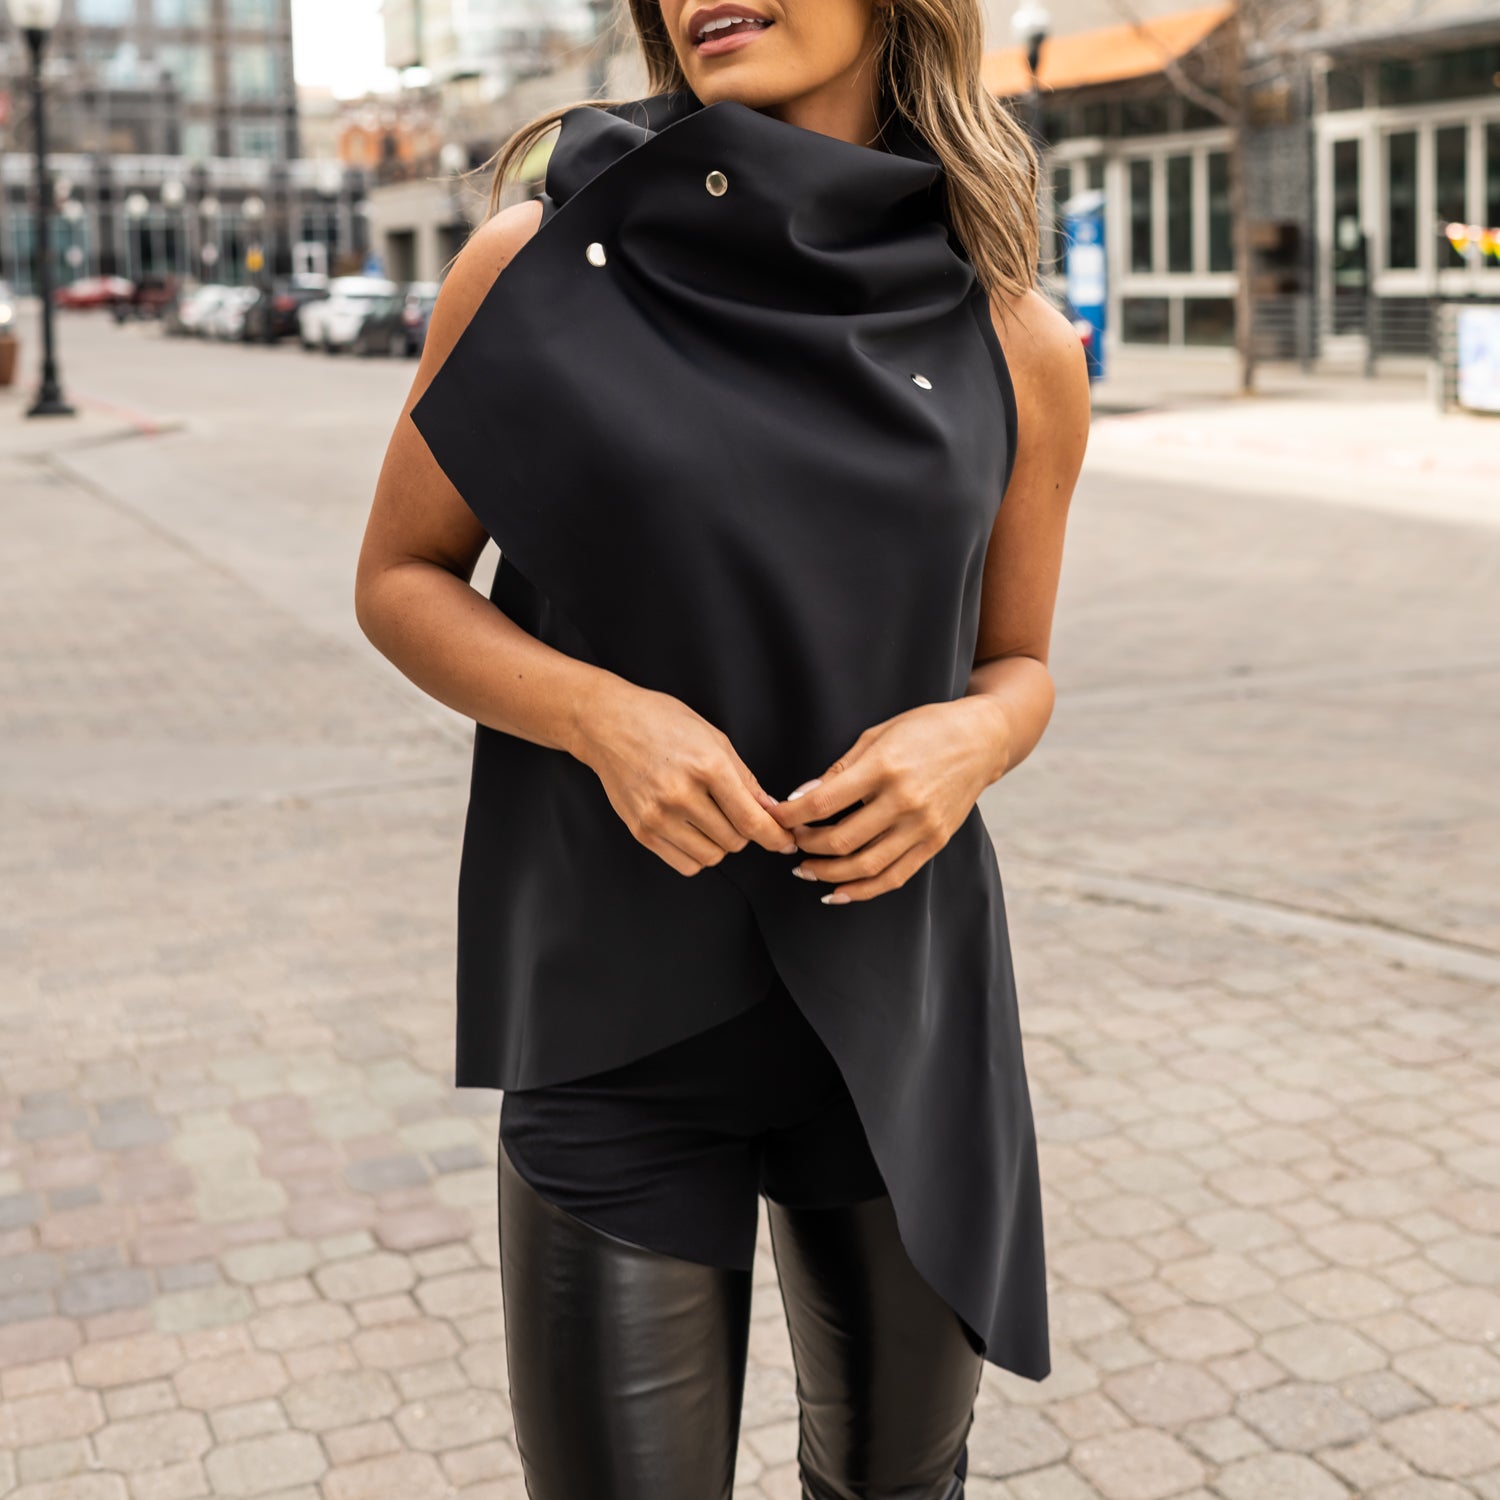 A woman wearing an asymmetrical vest in black by Malaika New York a zero waste vest design